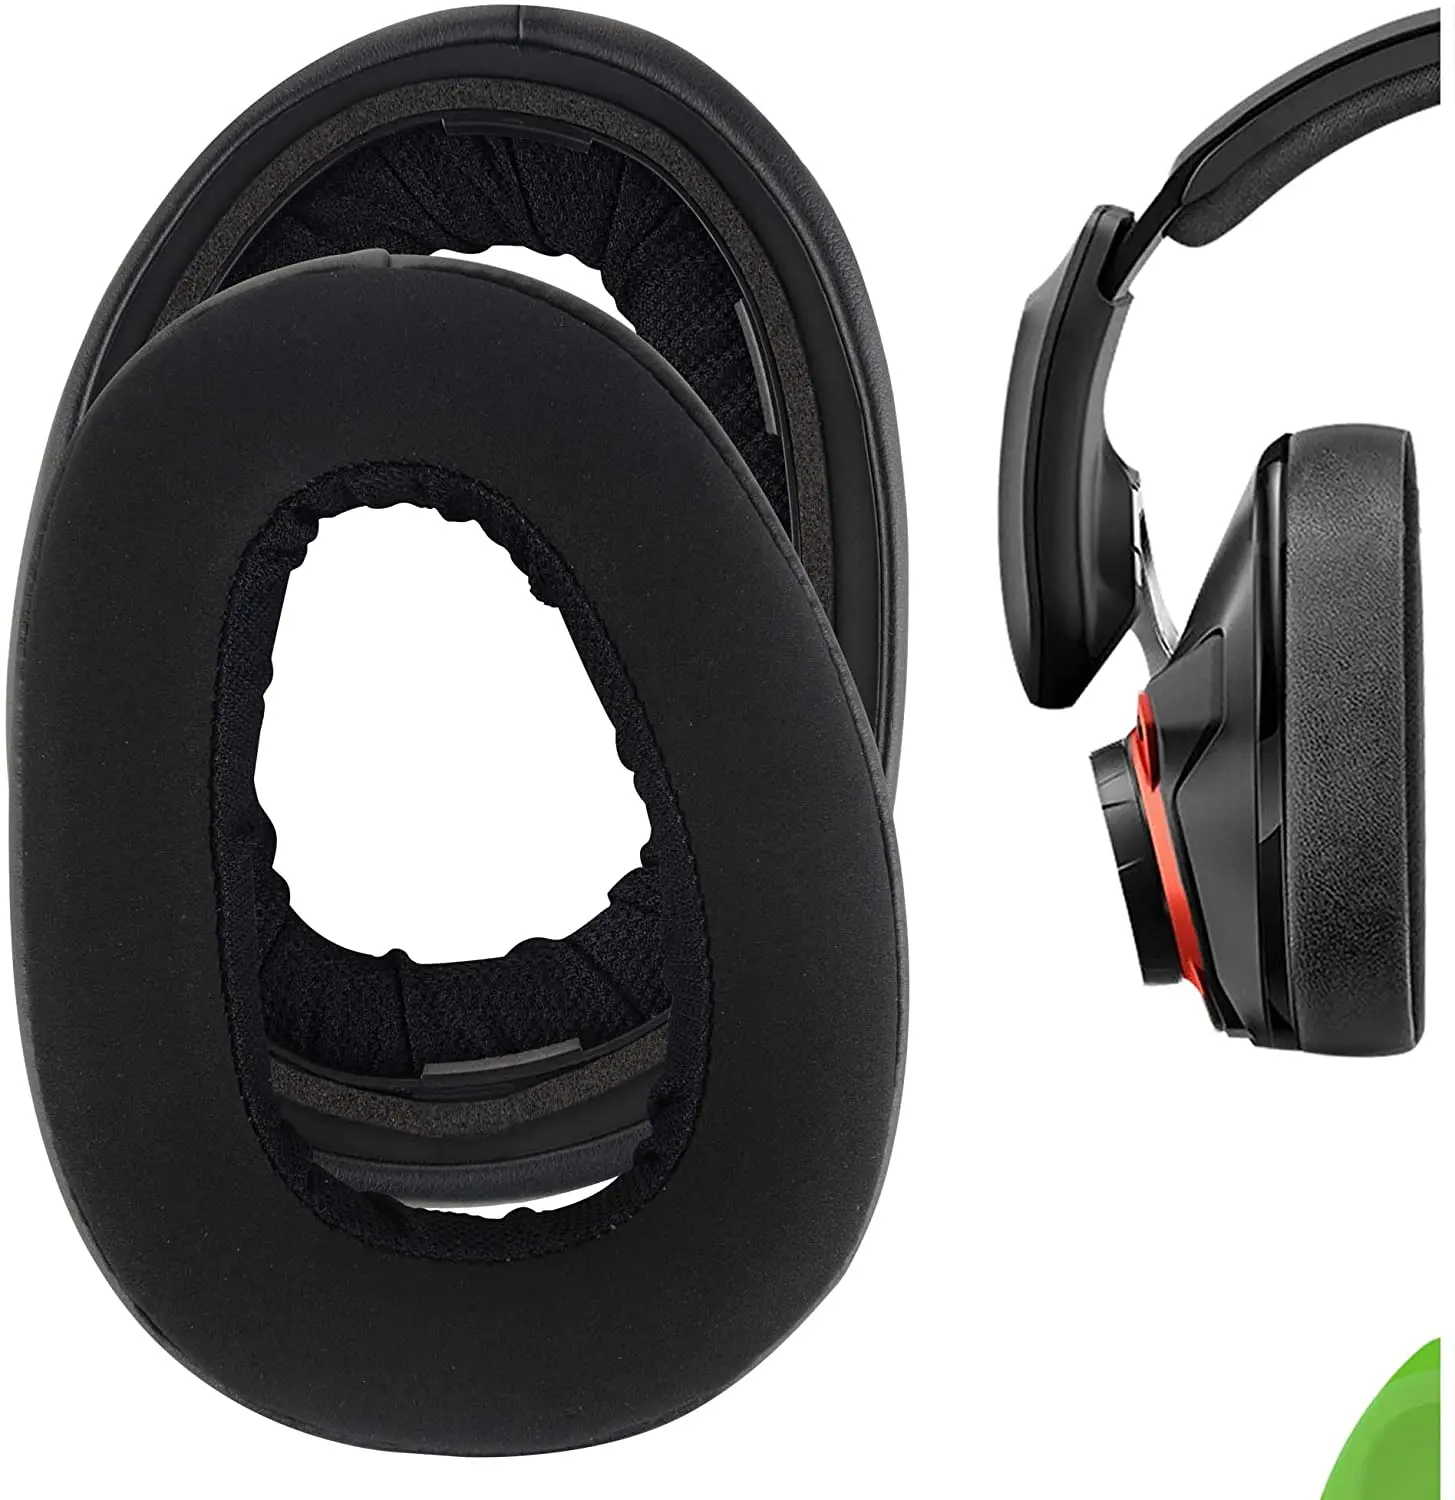 GSP 600 Comfort Hybrid Velour Replacement Ear Pads for Sennheíser GSP 600, GSP 670, GSP 500 Professional Gaming Headphones enlarge